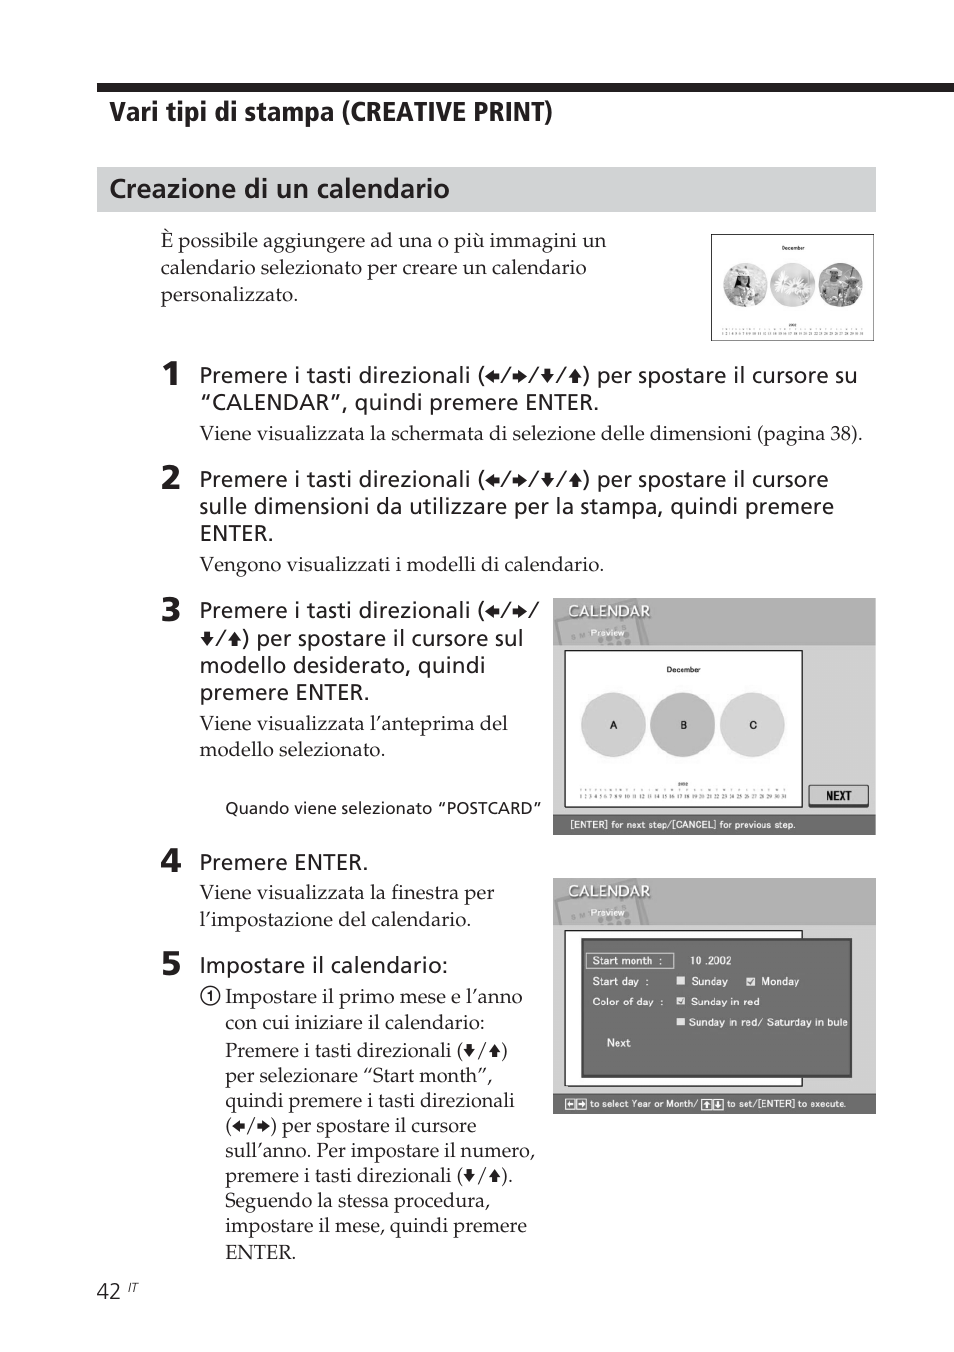 Creazione di un calendario | Sony DPP-EX5 Benutzerhandbuch | Seite 294 / 340